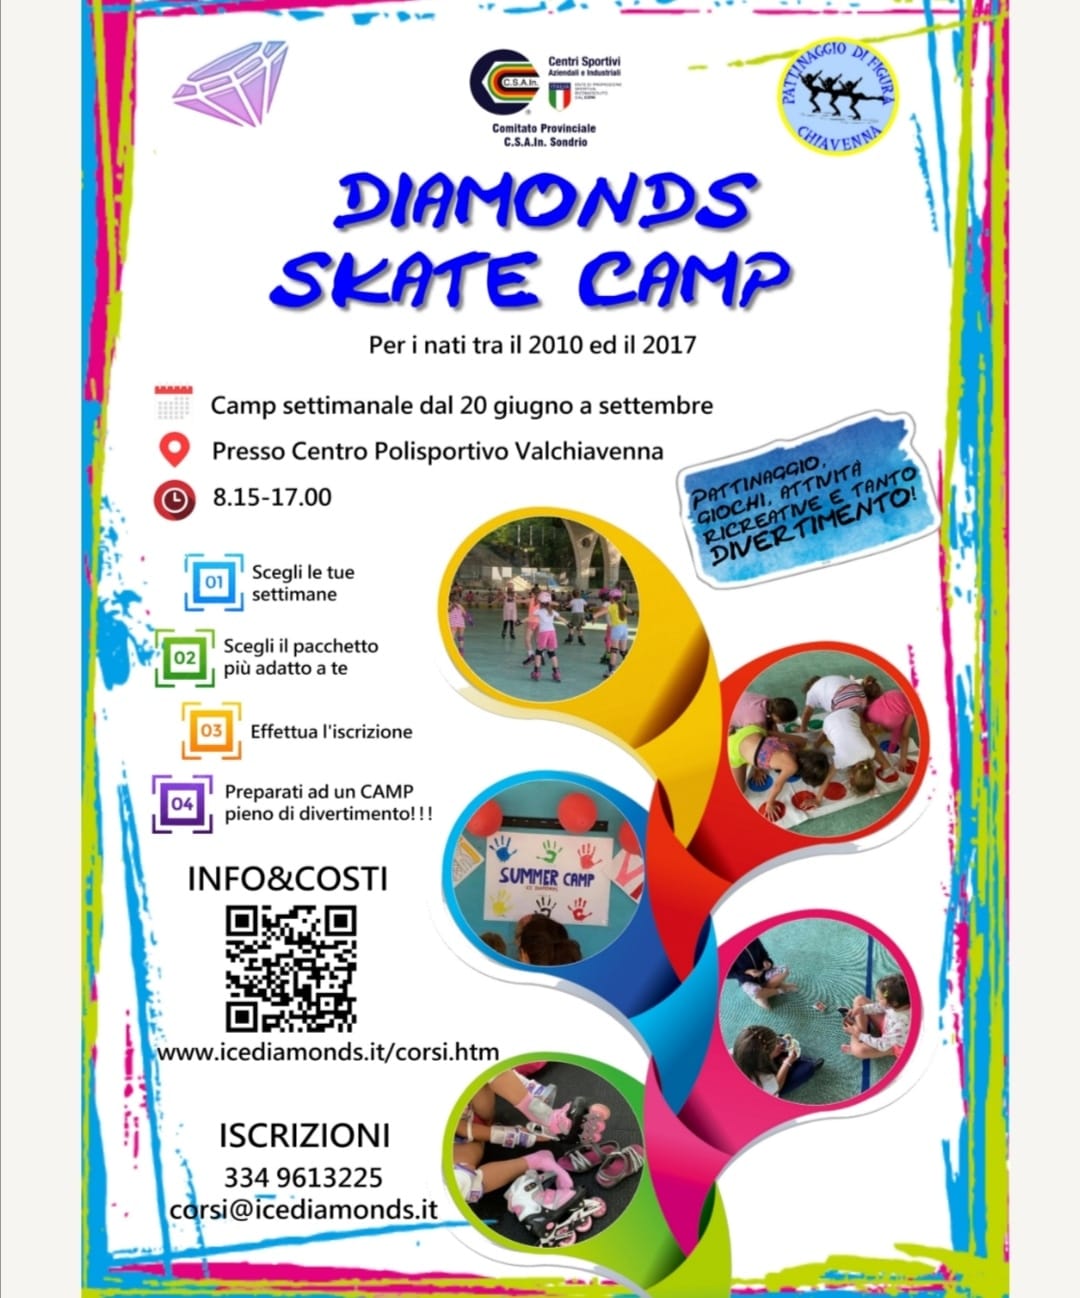 Diamonds skate camp